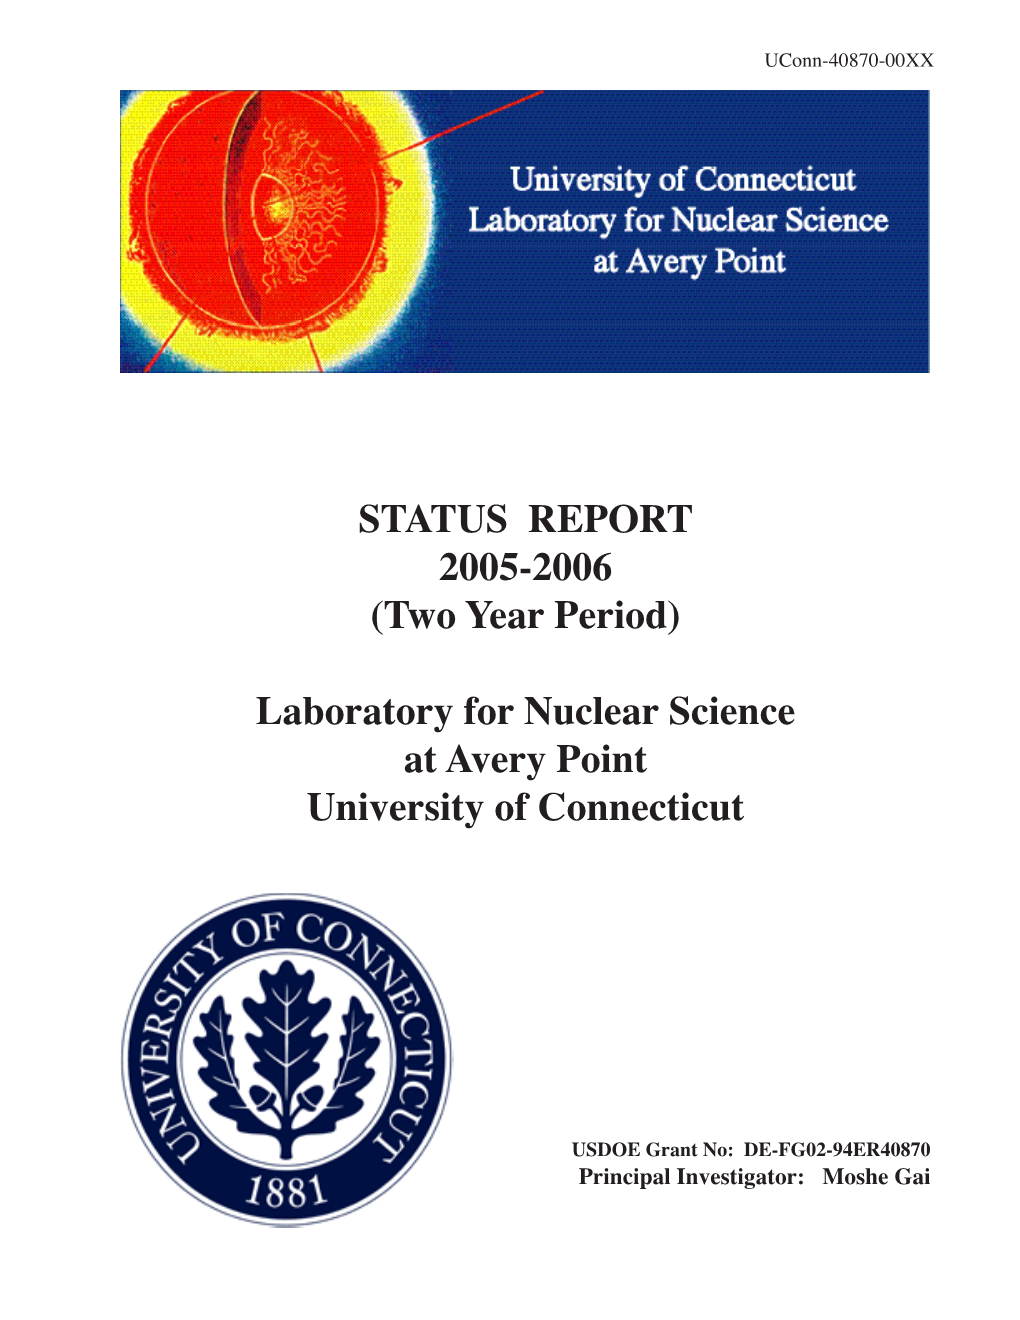 Progress Report (2005-2006).Pdf